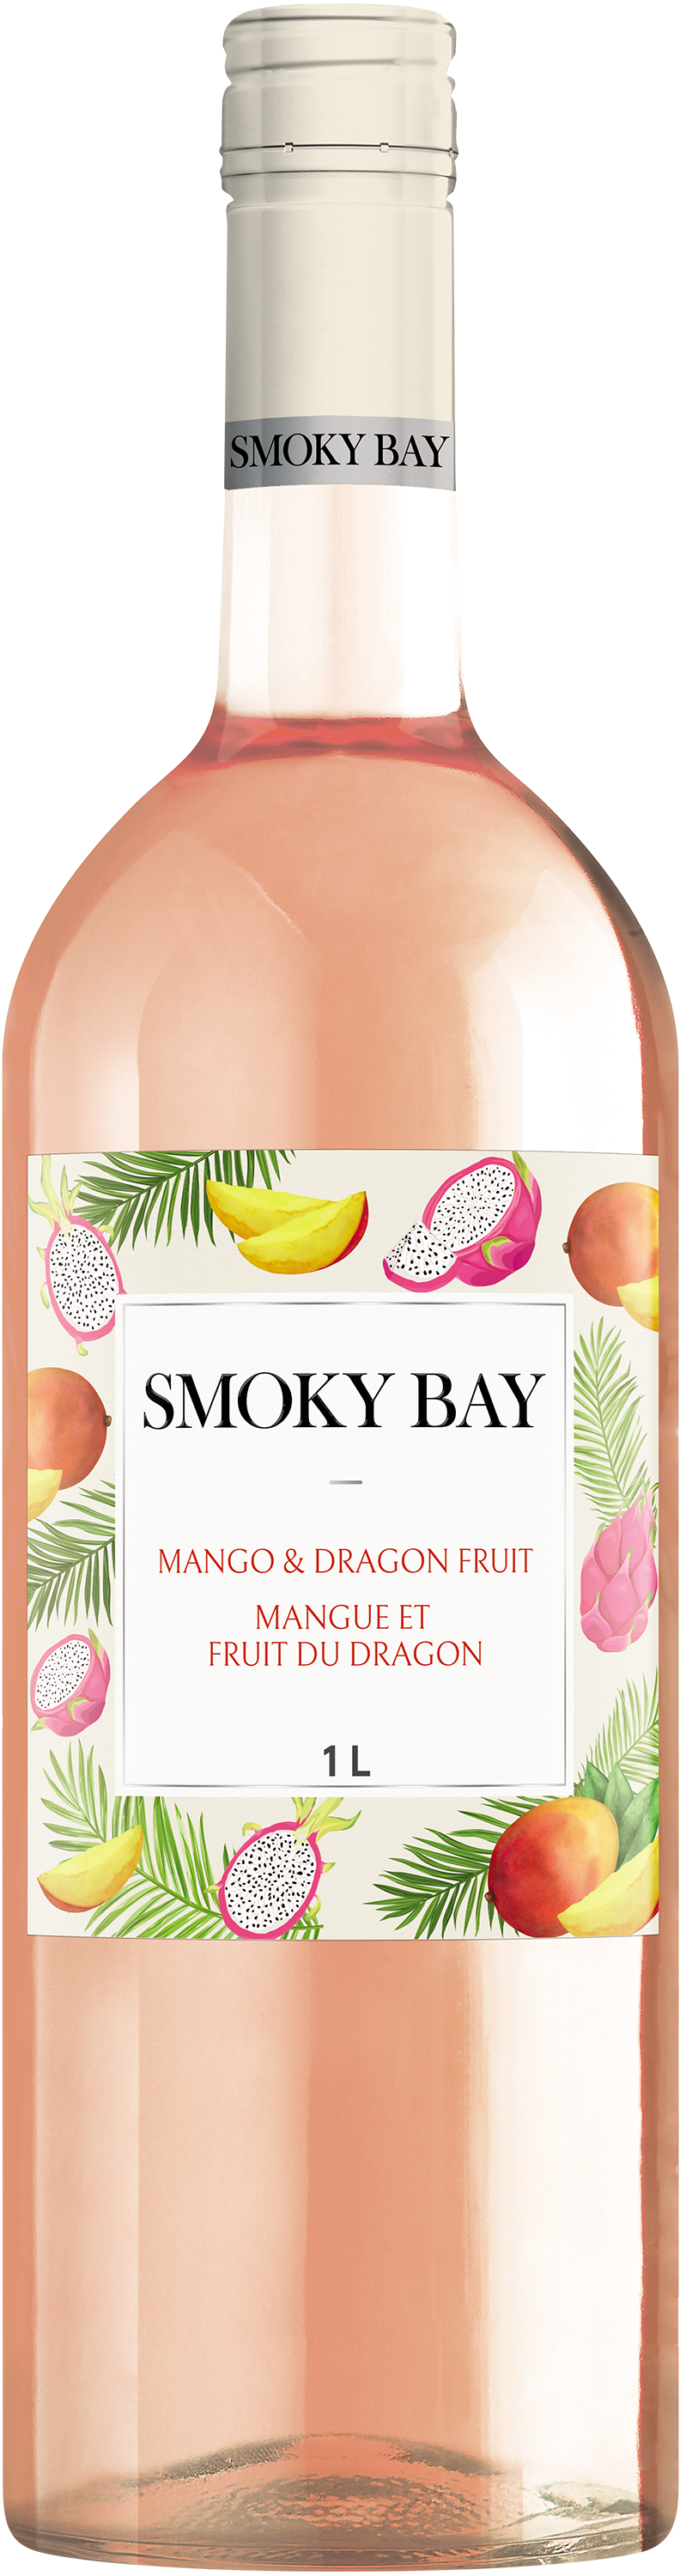 Smoky Bay Mangue et Fruit du dragon